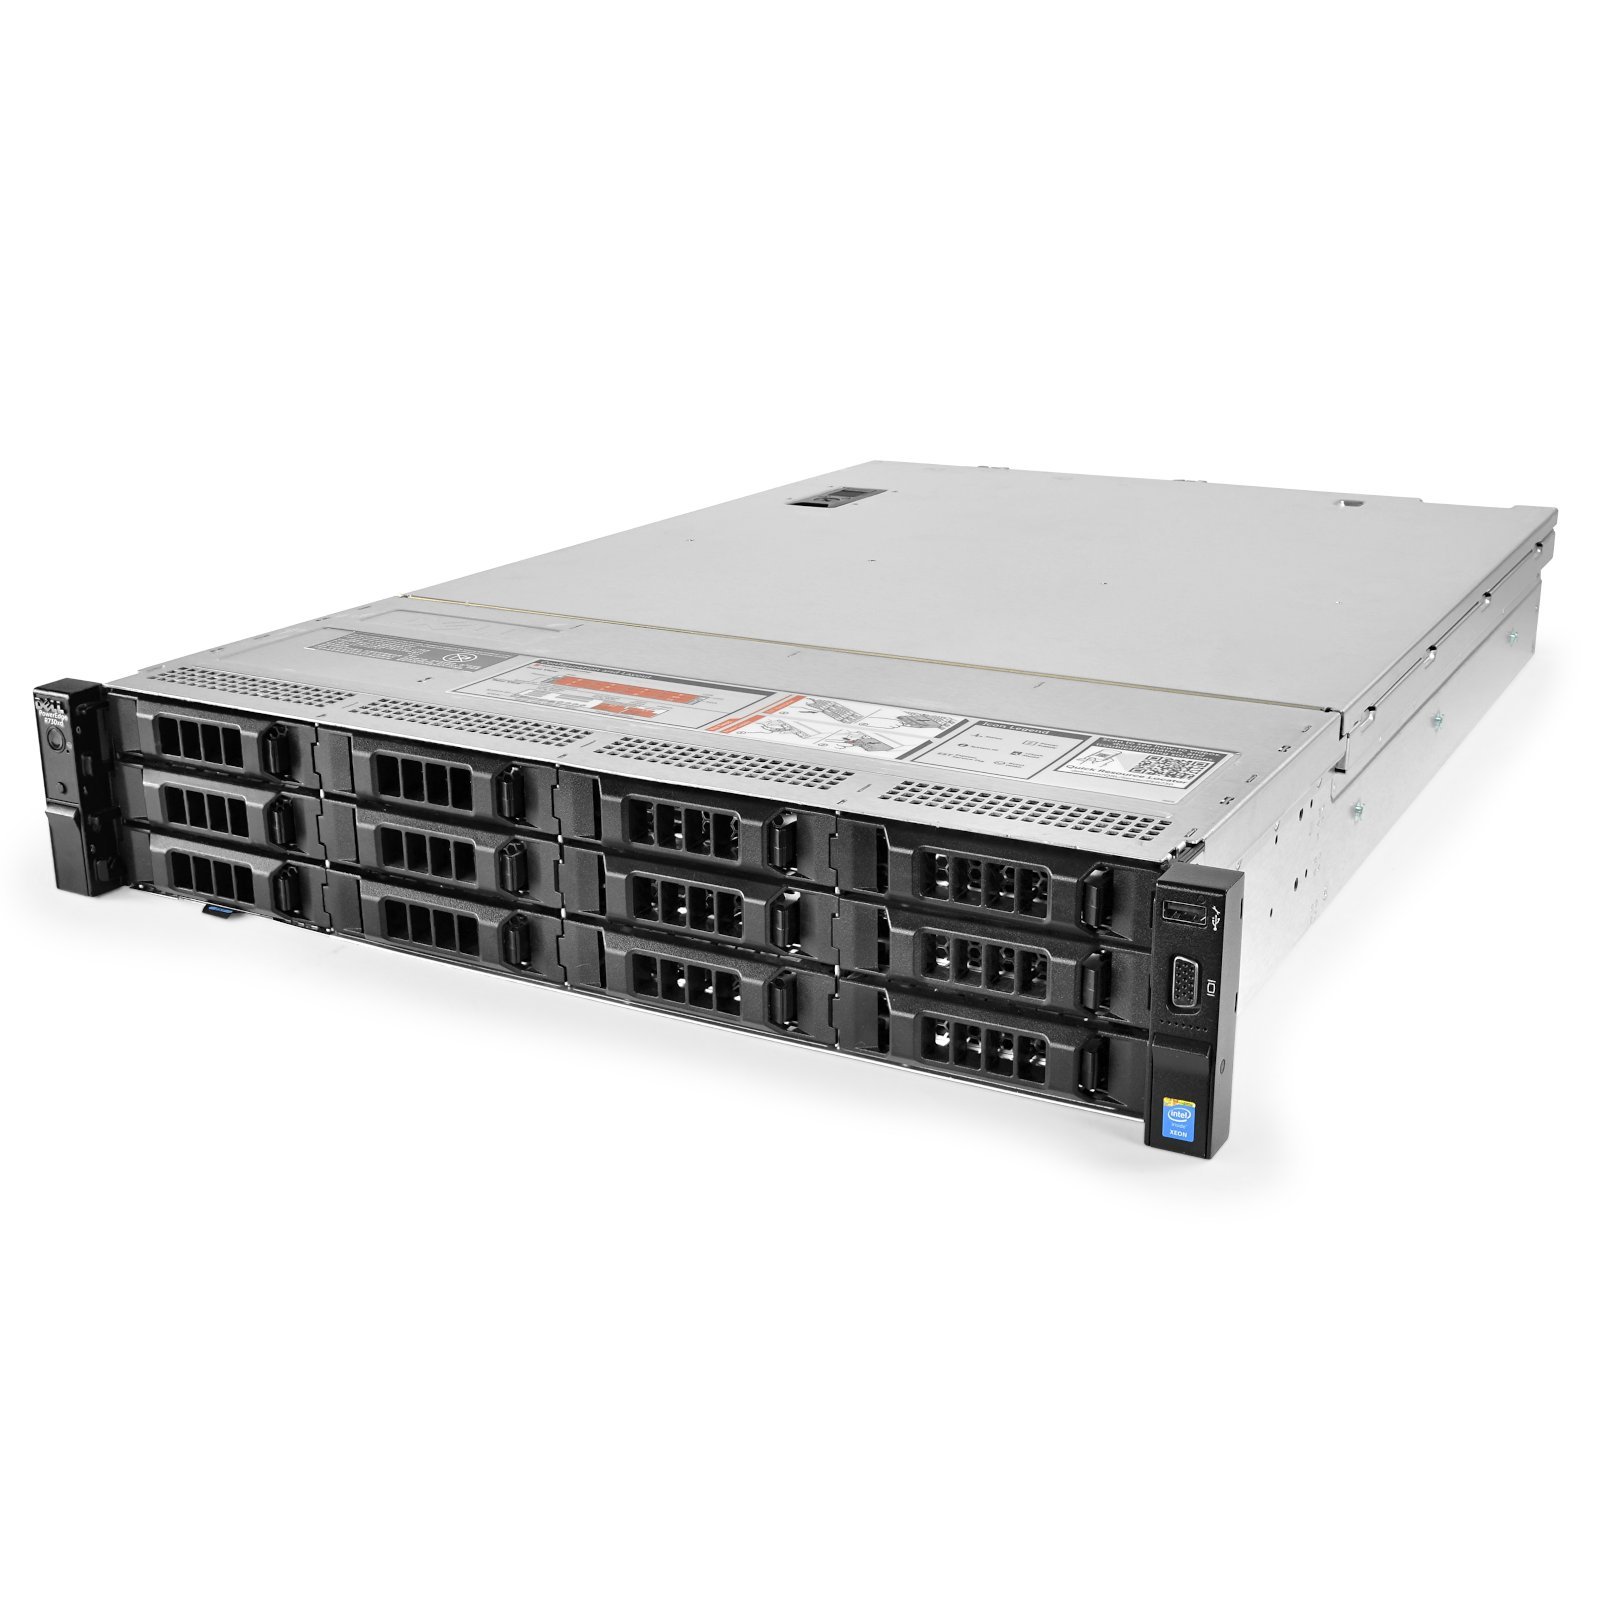 Подробное фото Сервер DELL PowerEdge R730XD Xeon 2x E5-2696v4 192Gb 2133P DDR4 12x noHDD 3.5", SAS RAID Perc H730 mini, 1024Mb, 2*PSU 750W